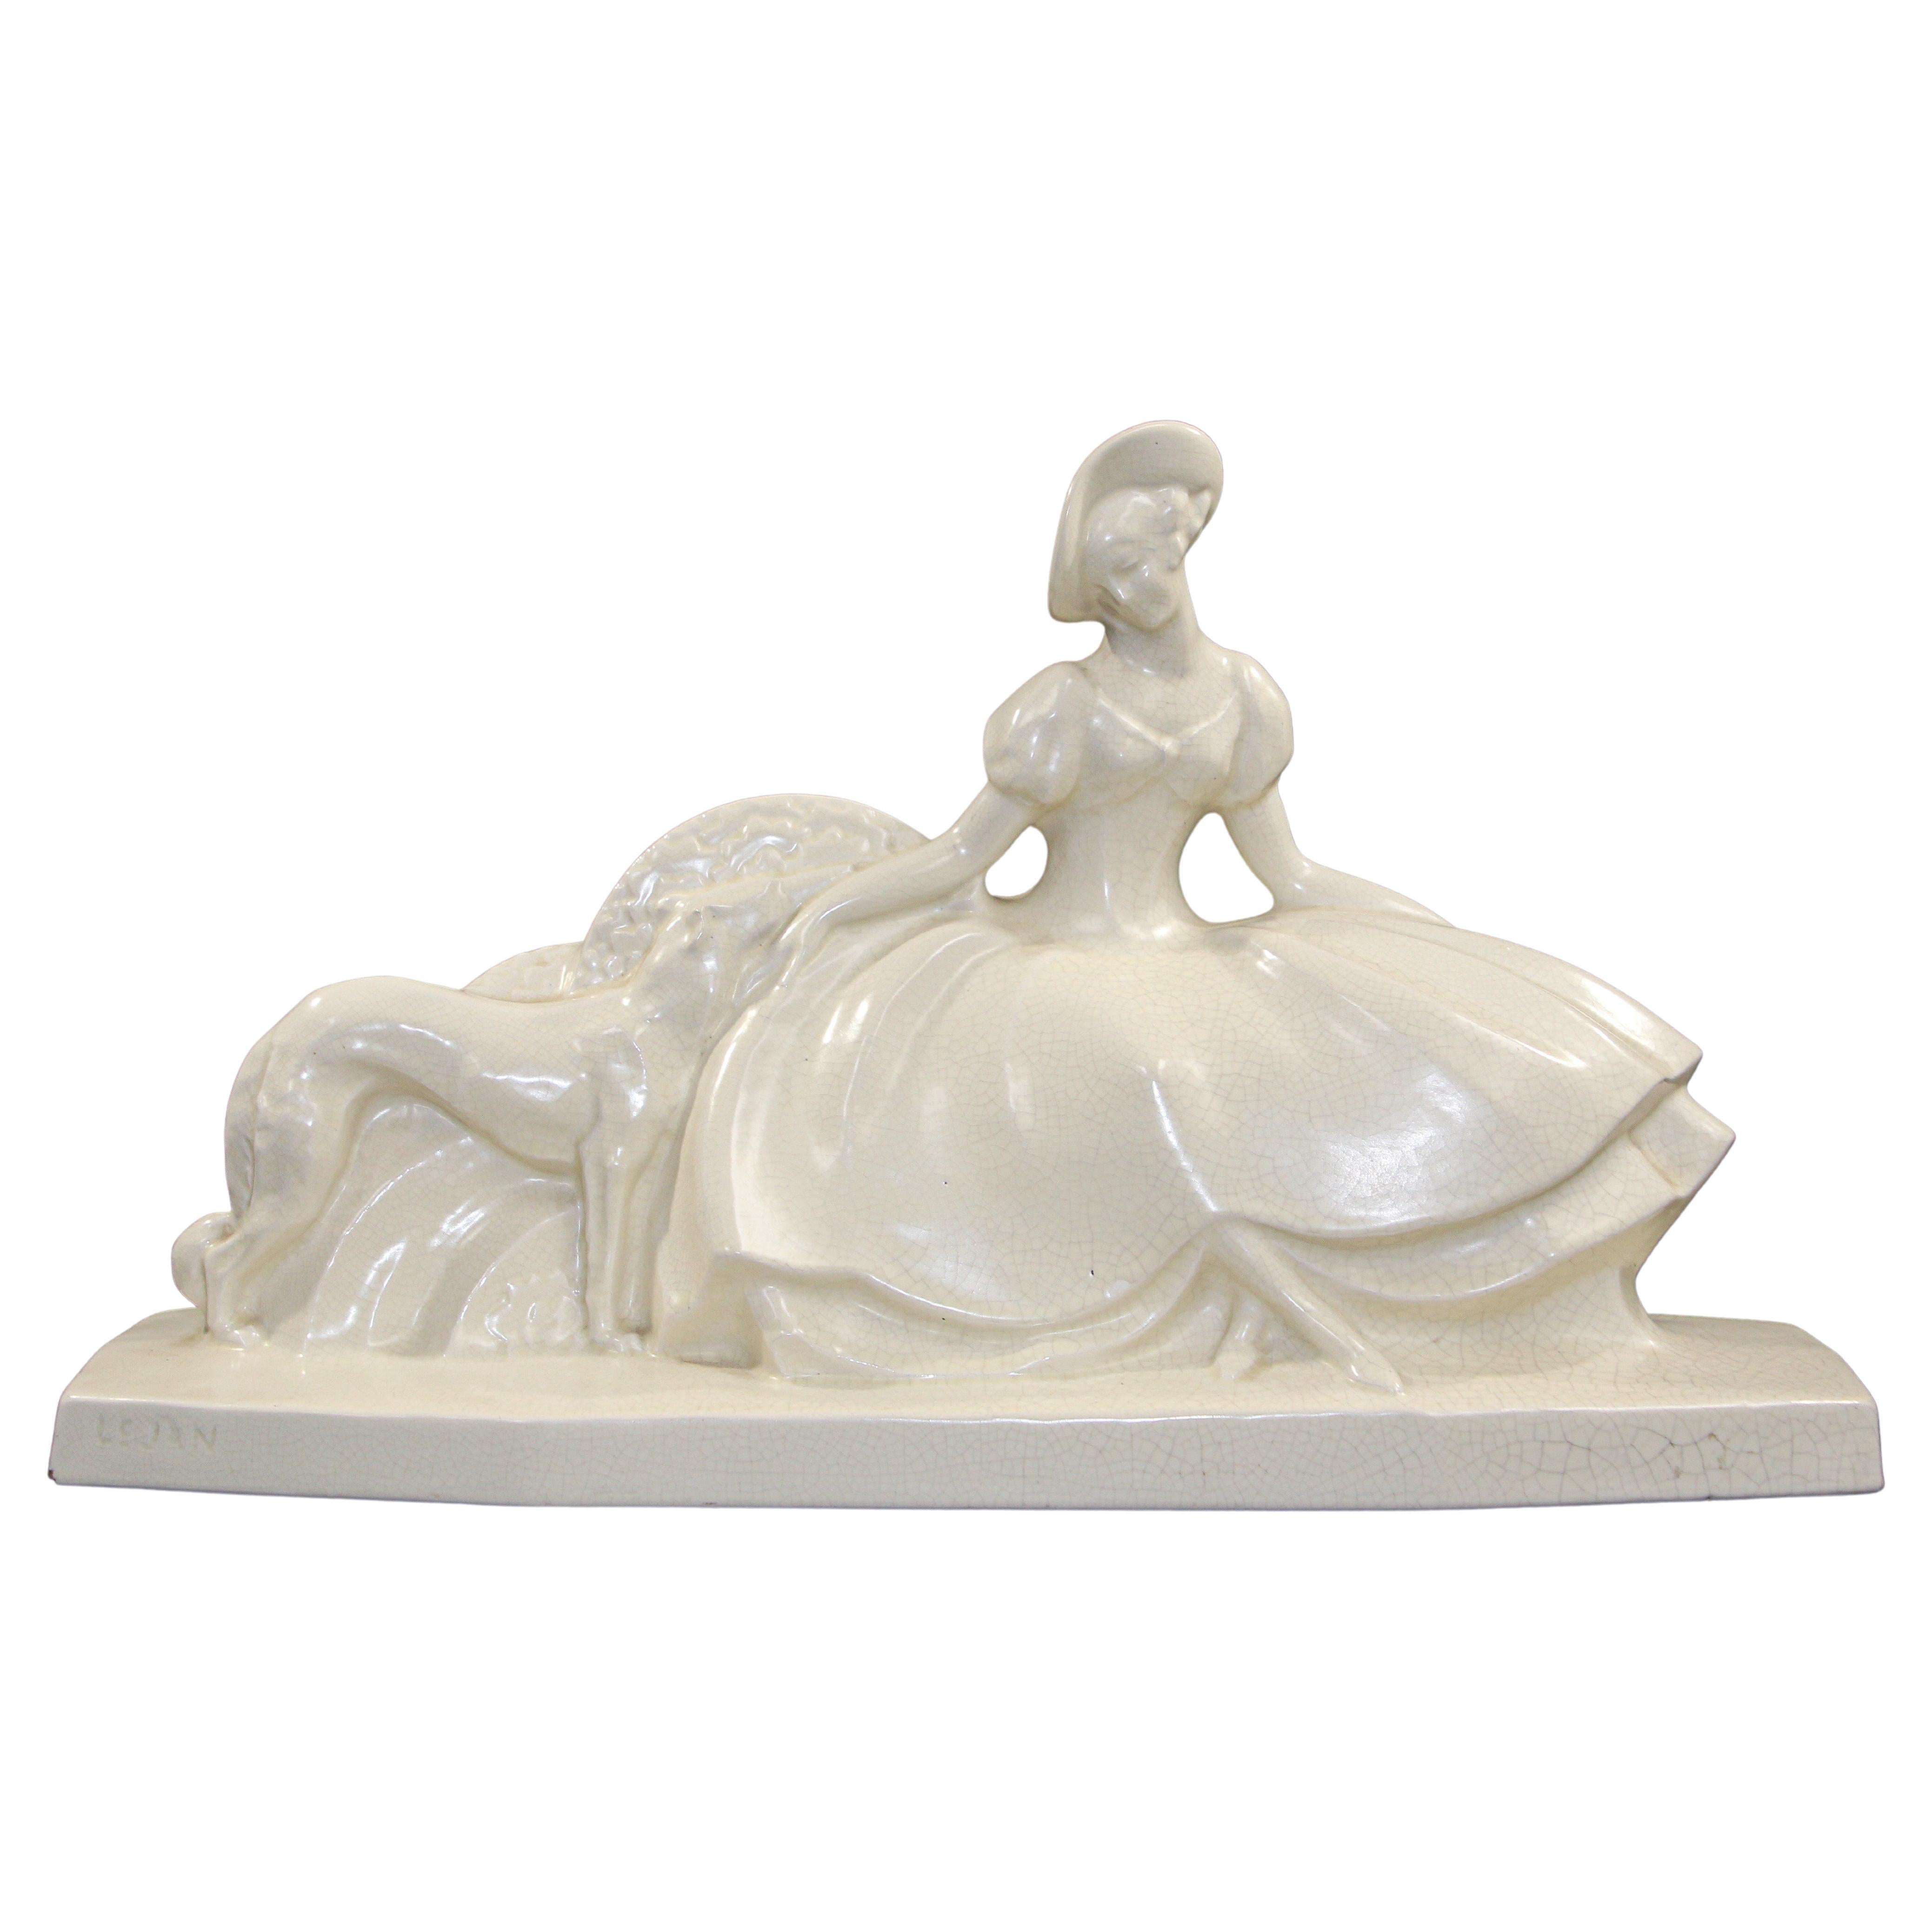 French Art Deco White Glazed Ceramic of a Lady with Her Greyhound by Lejan